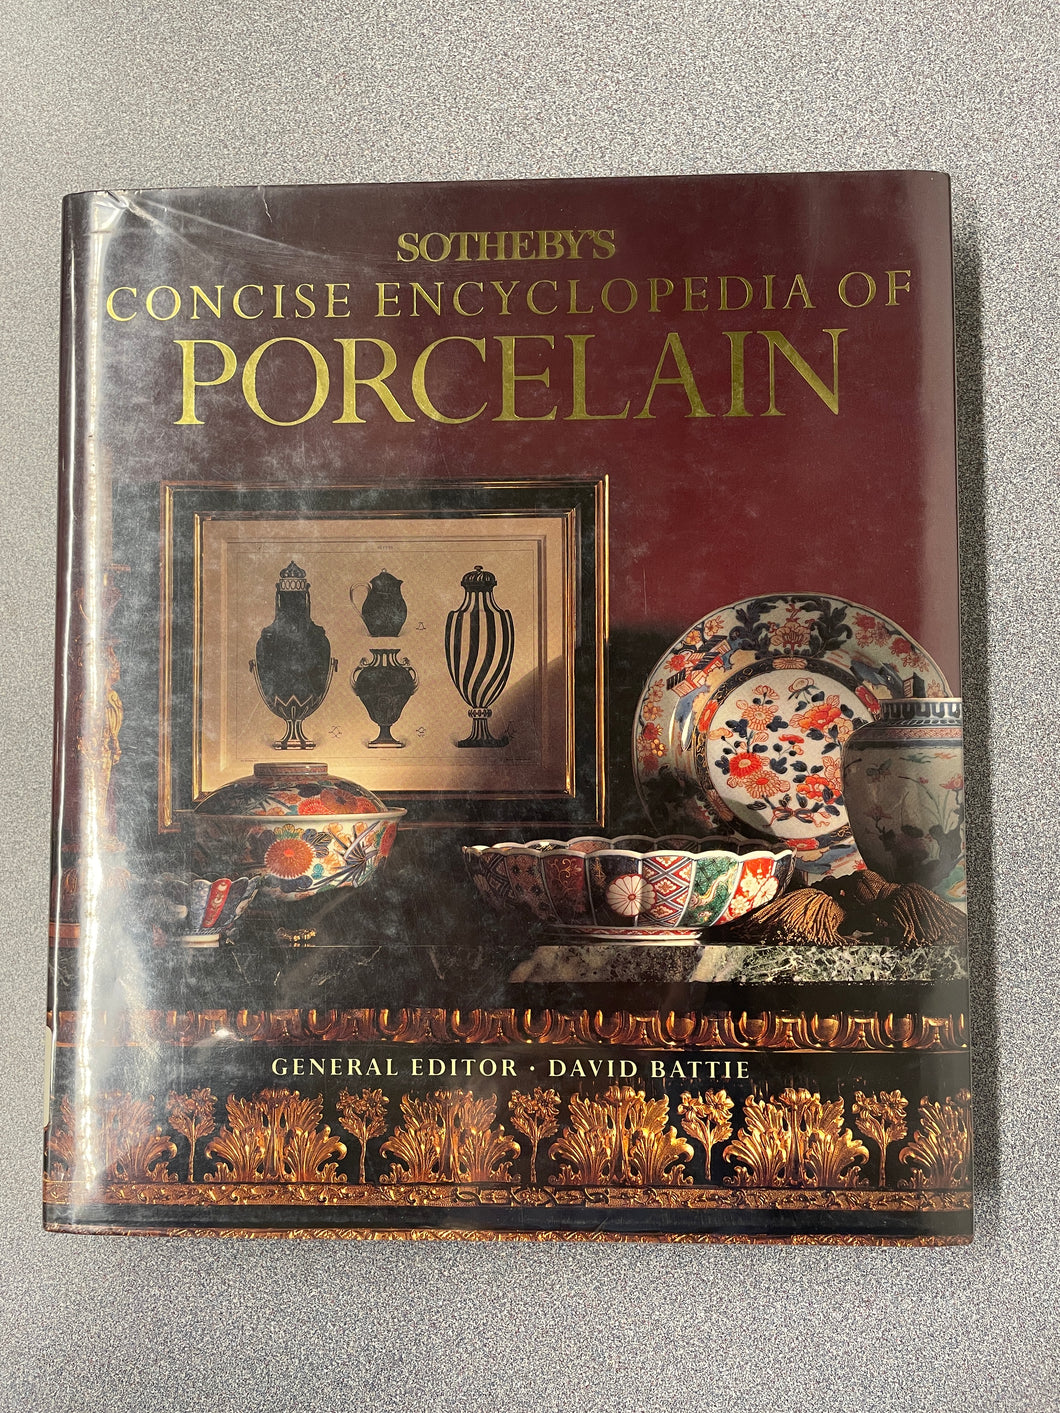 Sotheby's Concise Encyclopedia of Porcelain, Battie, David, ed. [1990] VA 11/23